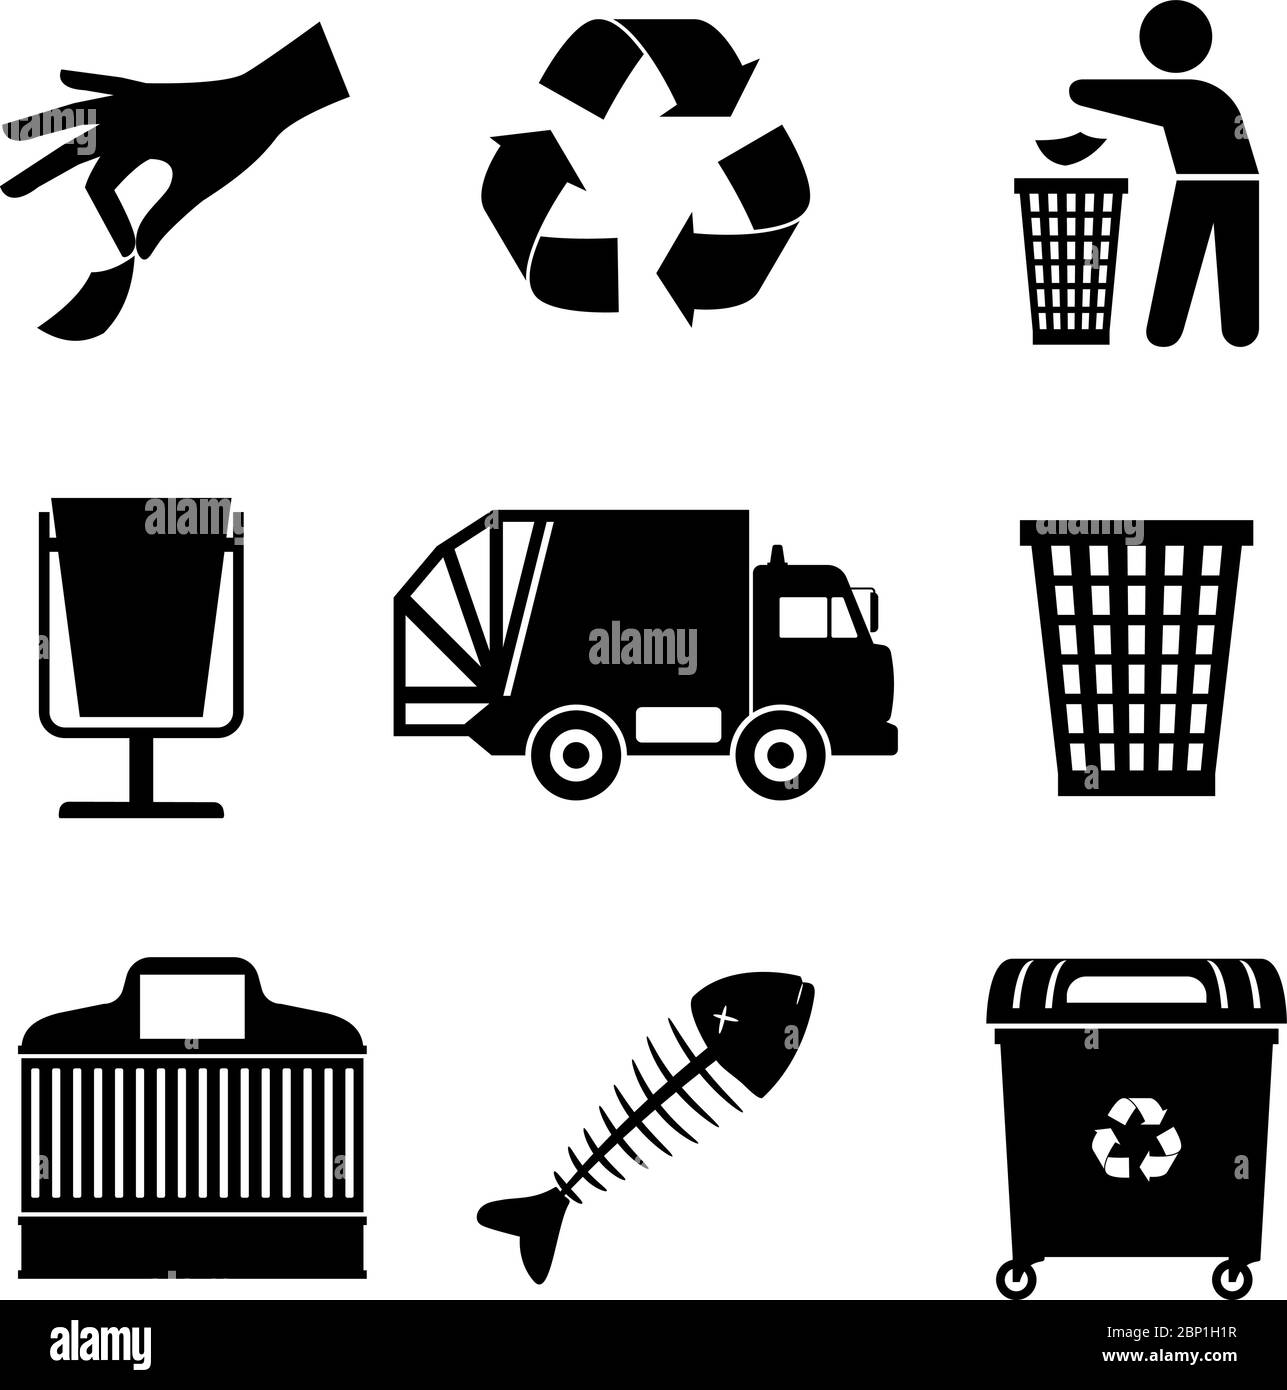 Schwarze Mülltonne und Abfallbehälter, Recycling-Zeichen-Symbole,  Vektorgrafik Stock-Vektorgrafik - Alamy